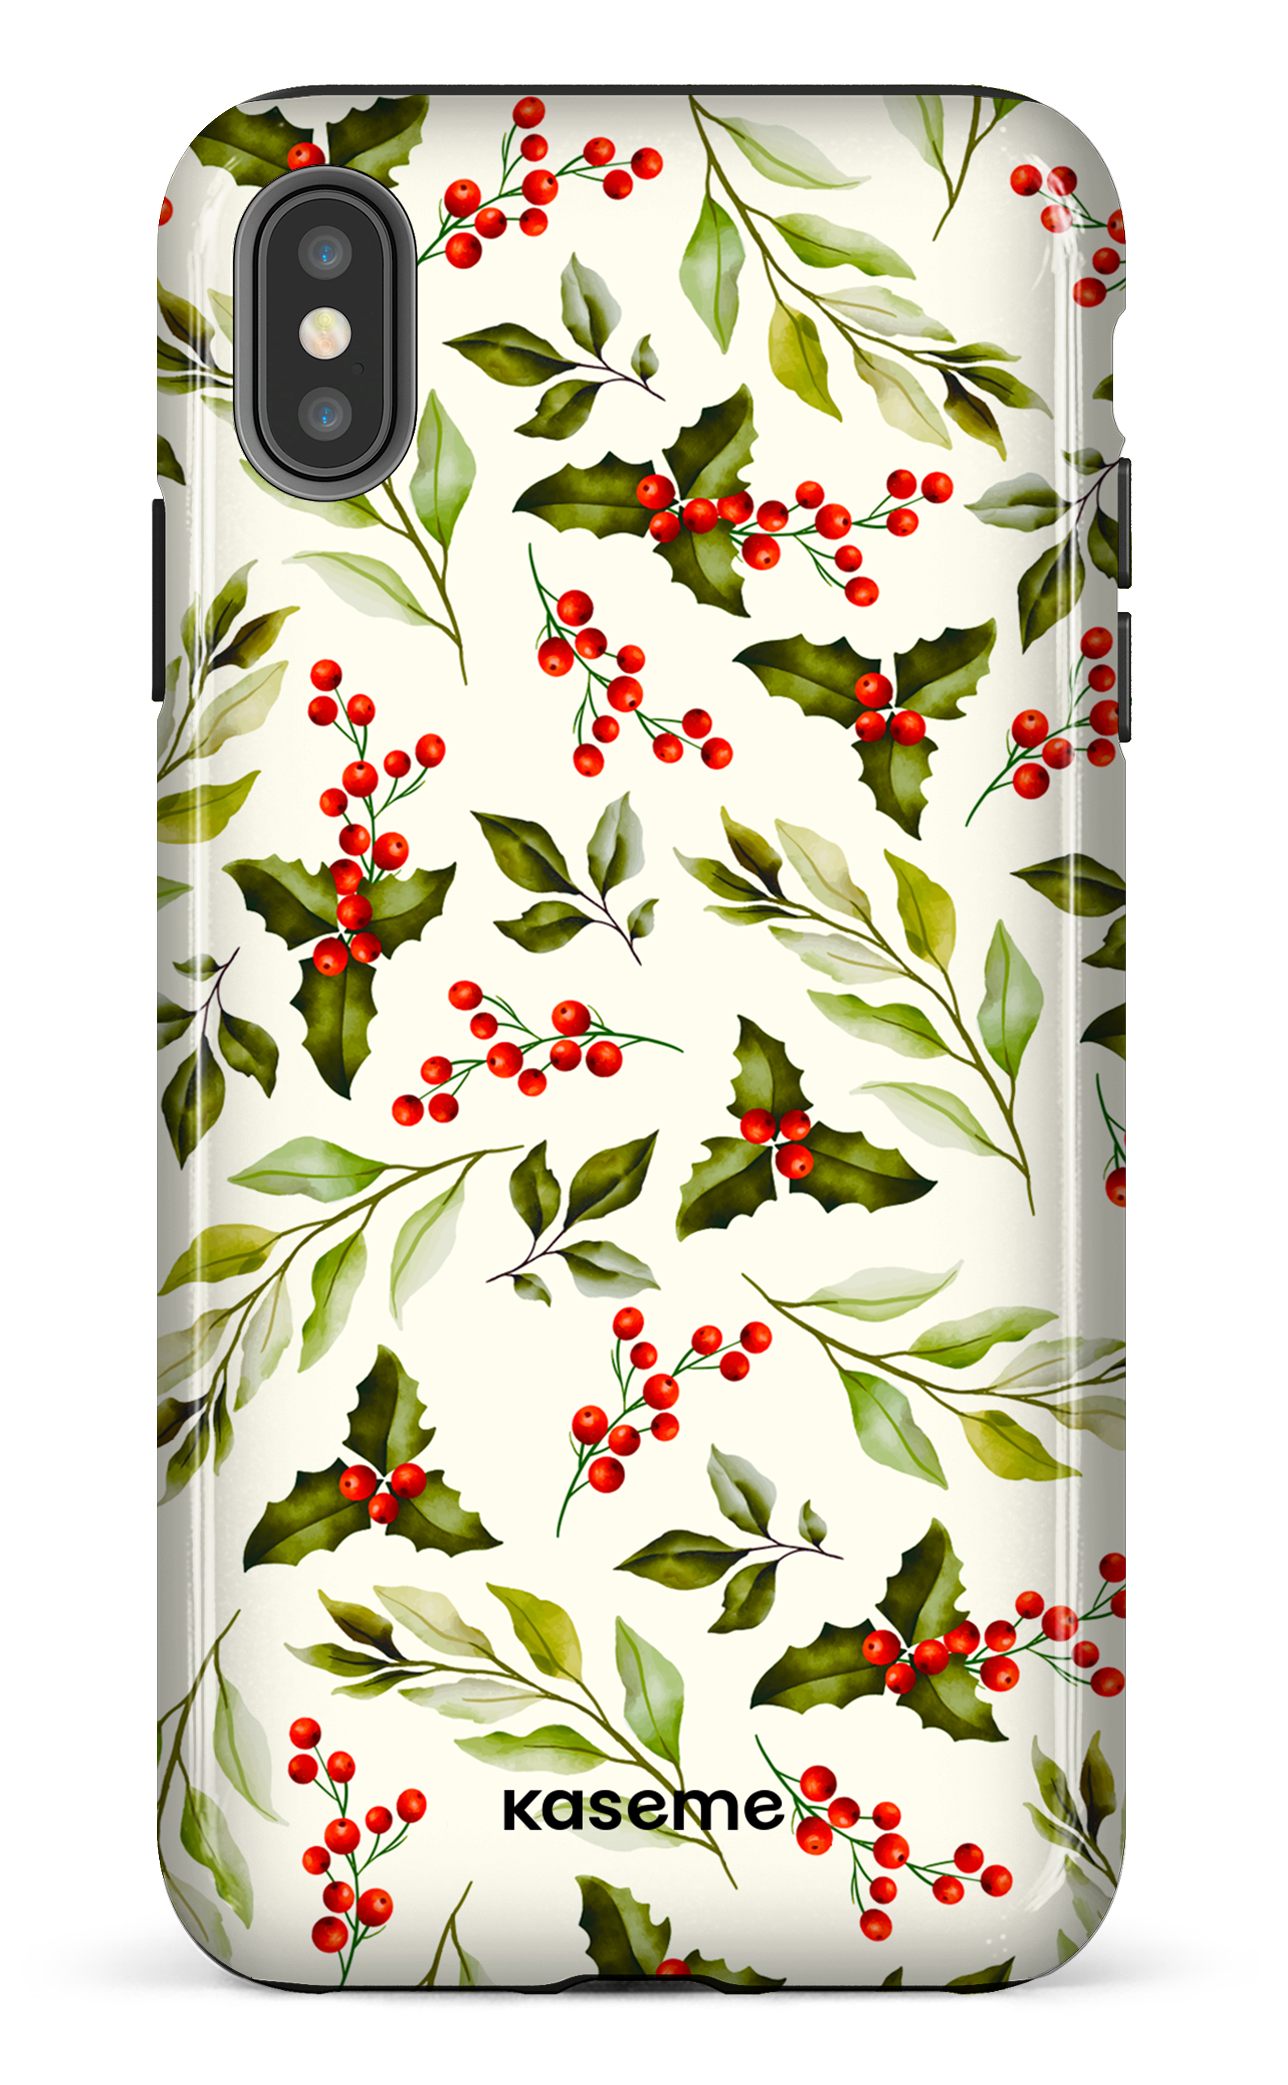 Mistletoe - iPhone XS Max